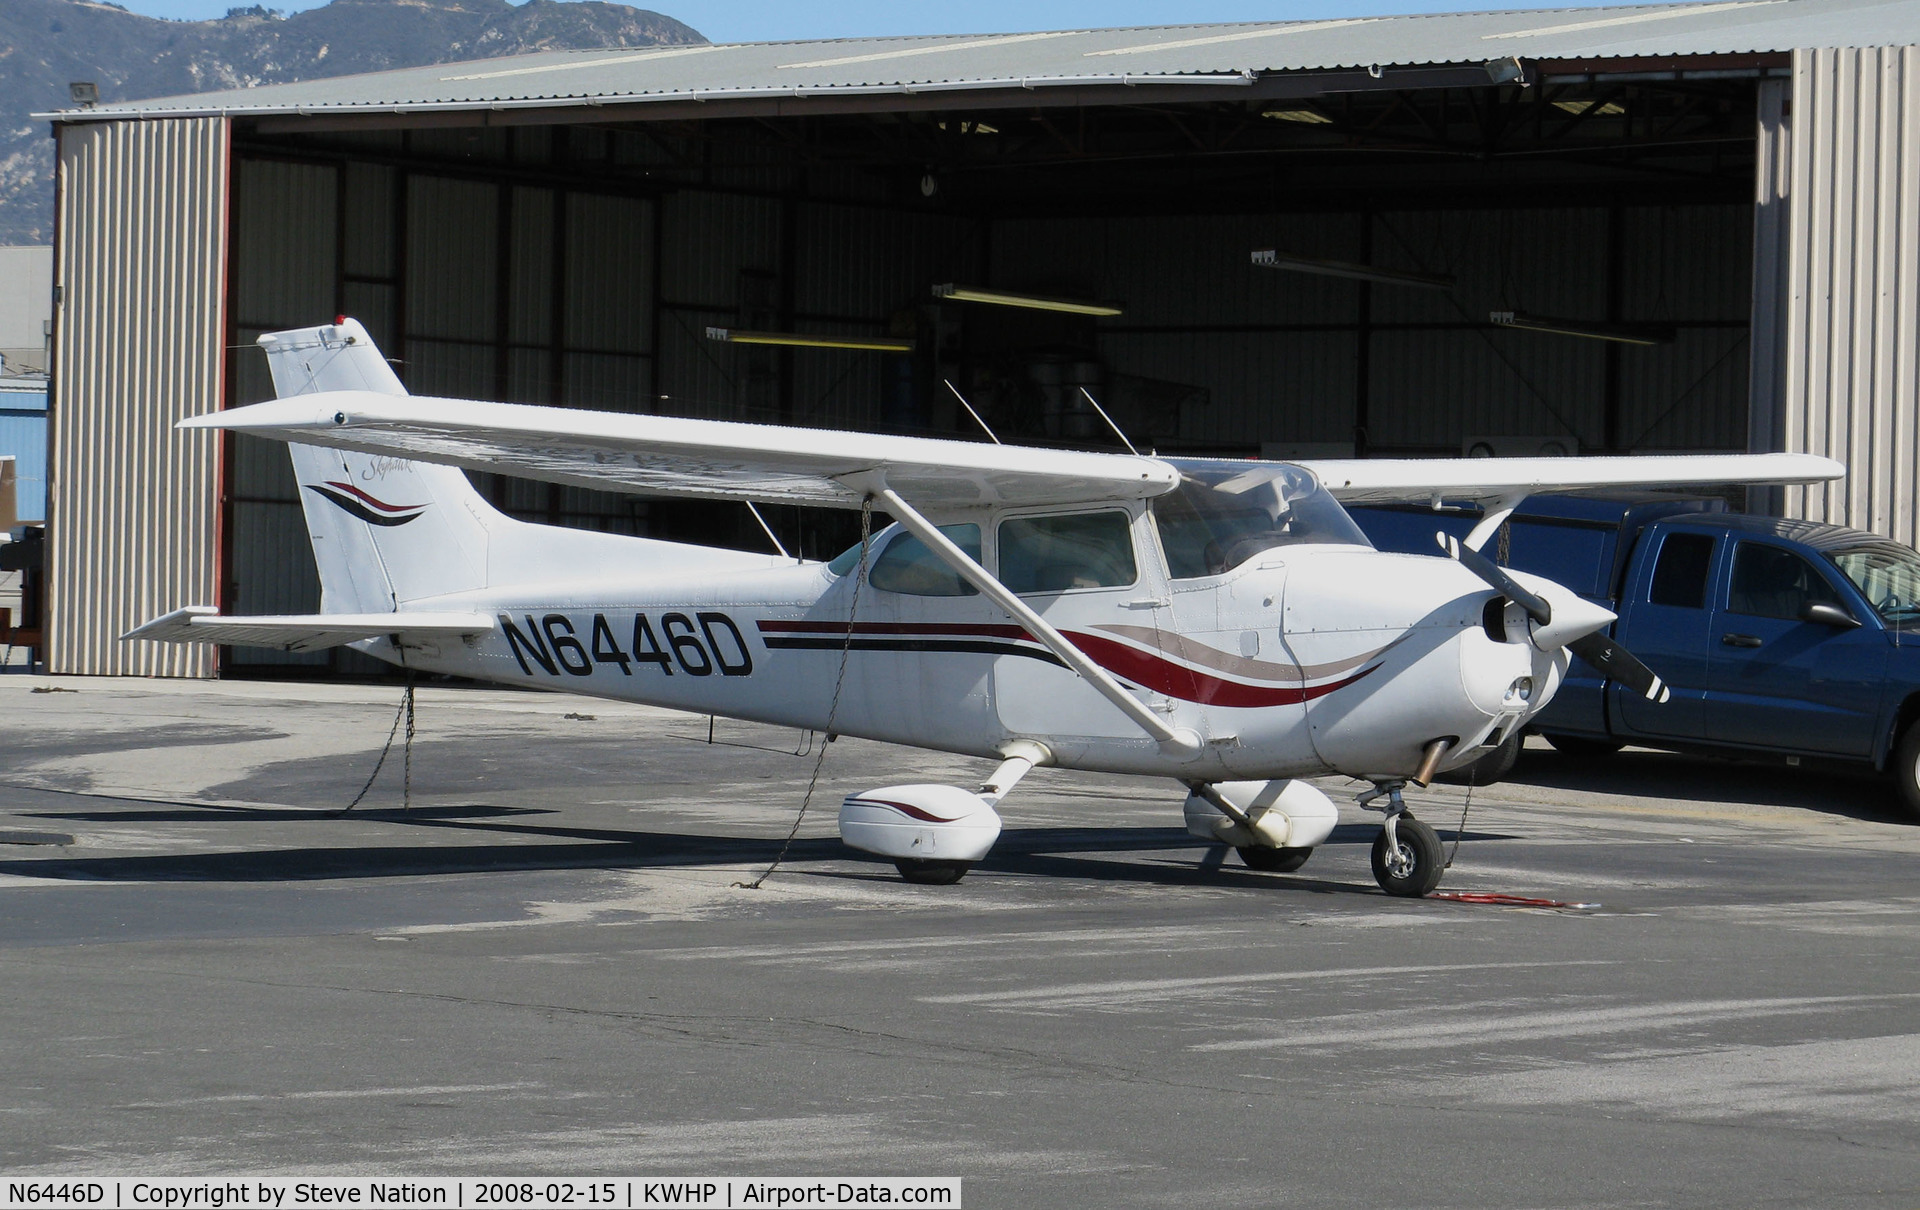 N6446D, 1979 Cessna 172N C/N 17272805, Locally-based 1979 Cessna 172N Skyhawk @ Whiteman Airport, Pacoima, CA (now registered to owner in Florida)